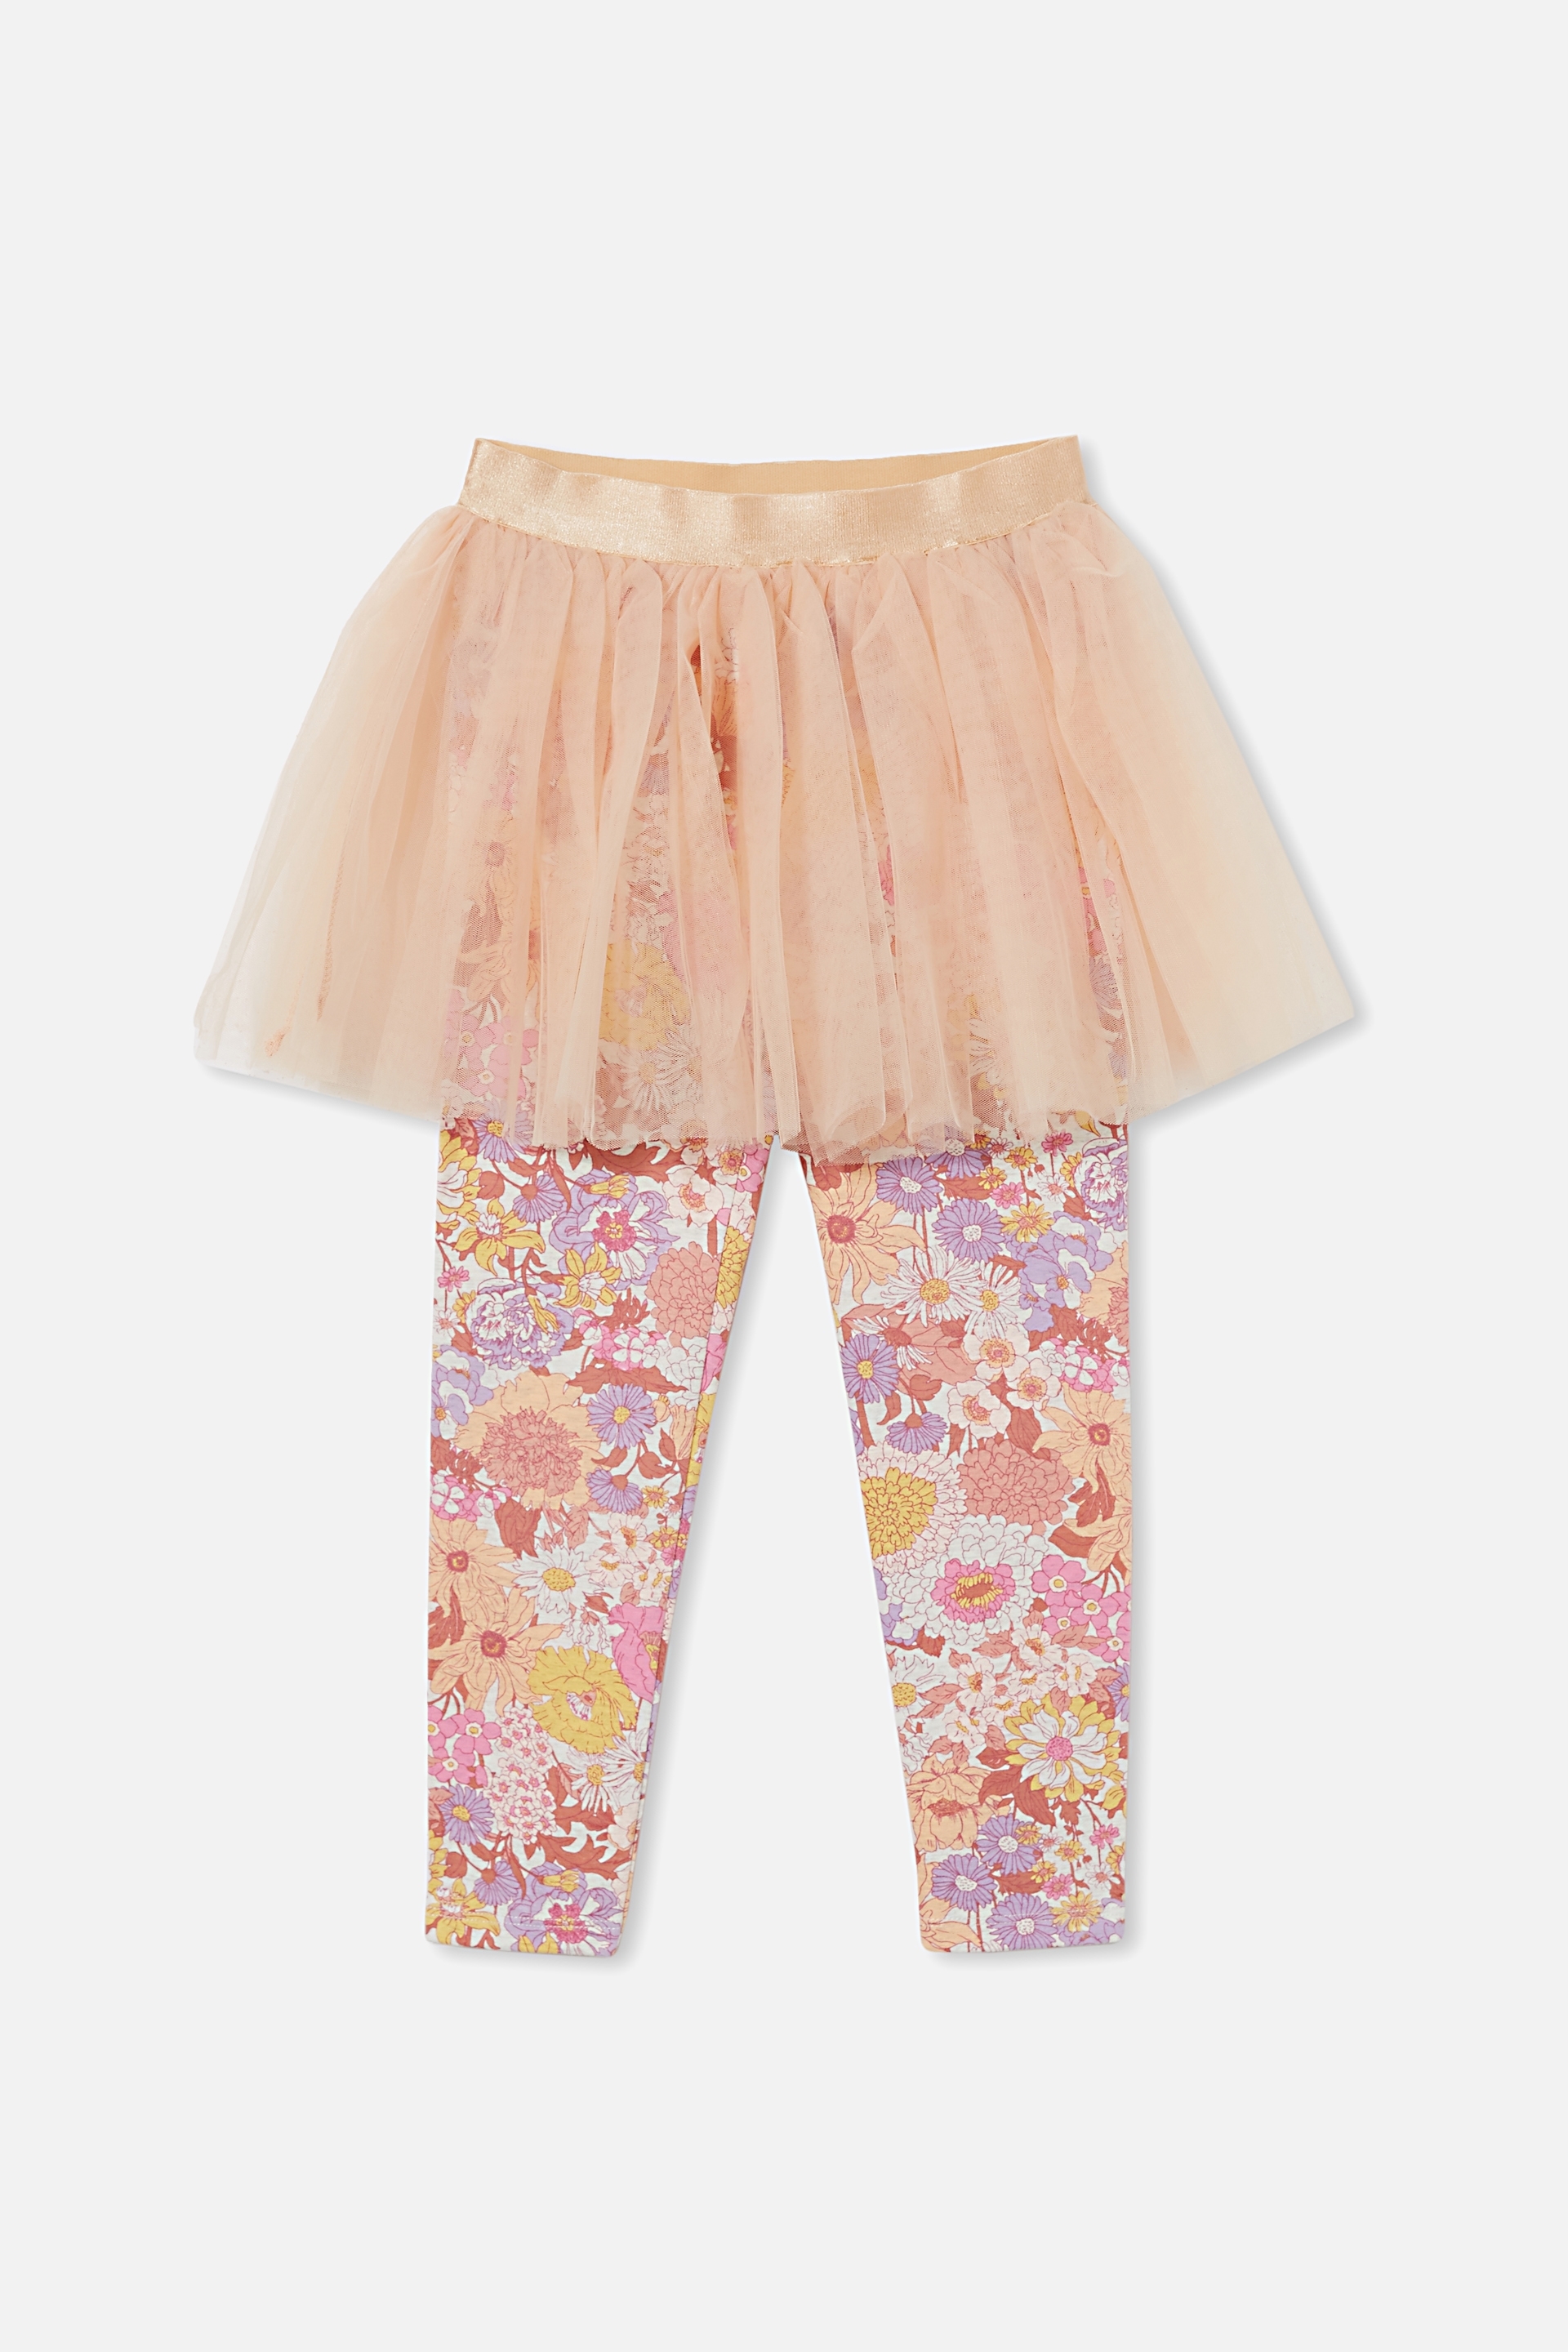 Cotton On Kids - Zoe Skegging - Peachy/pink boho floral